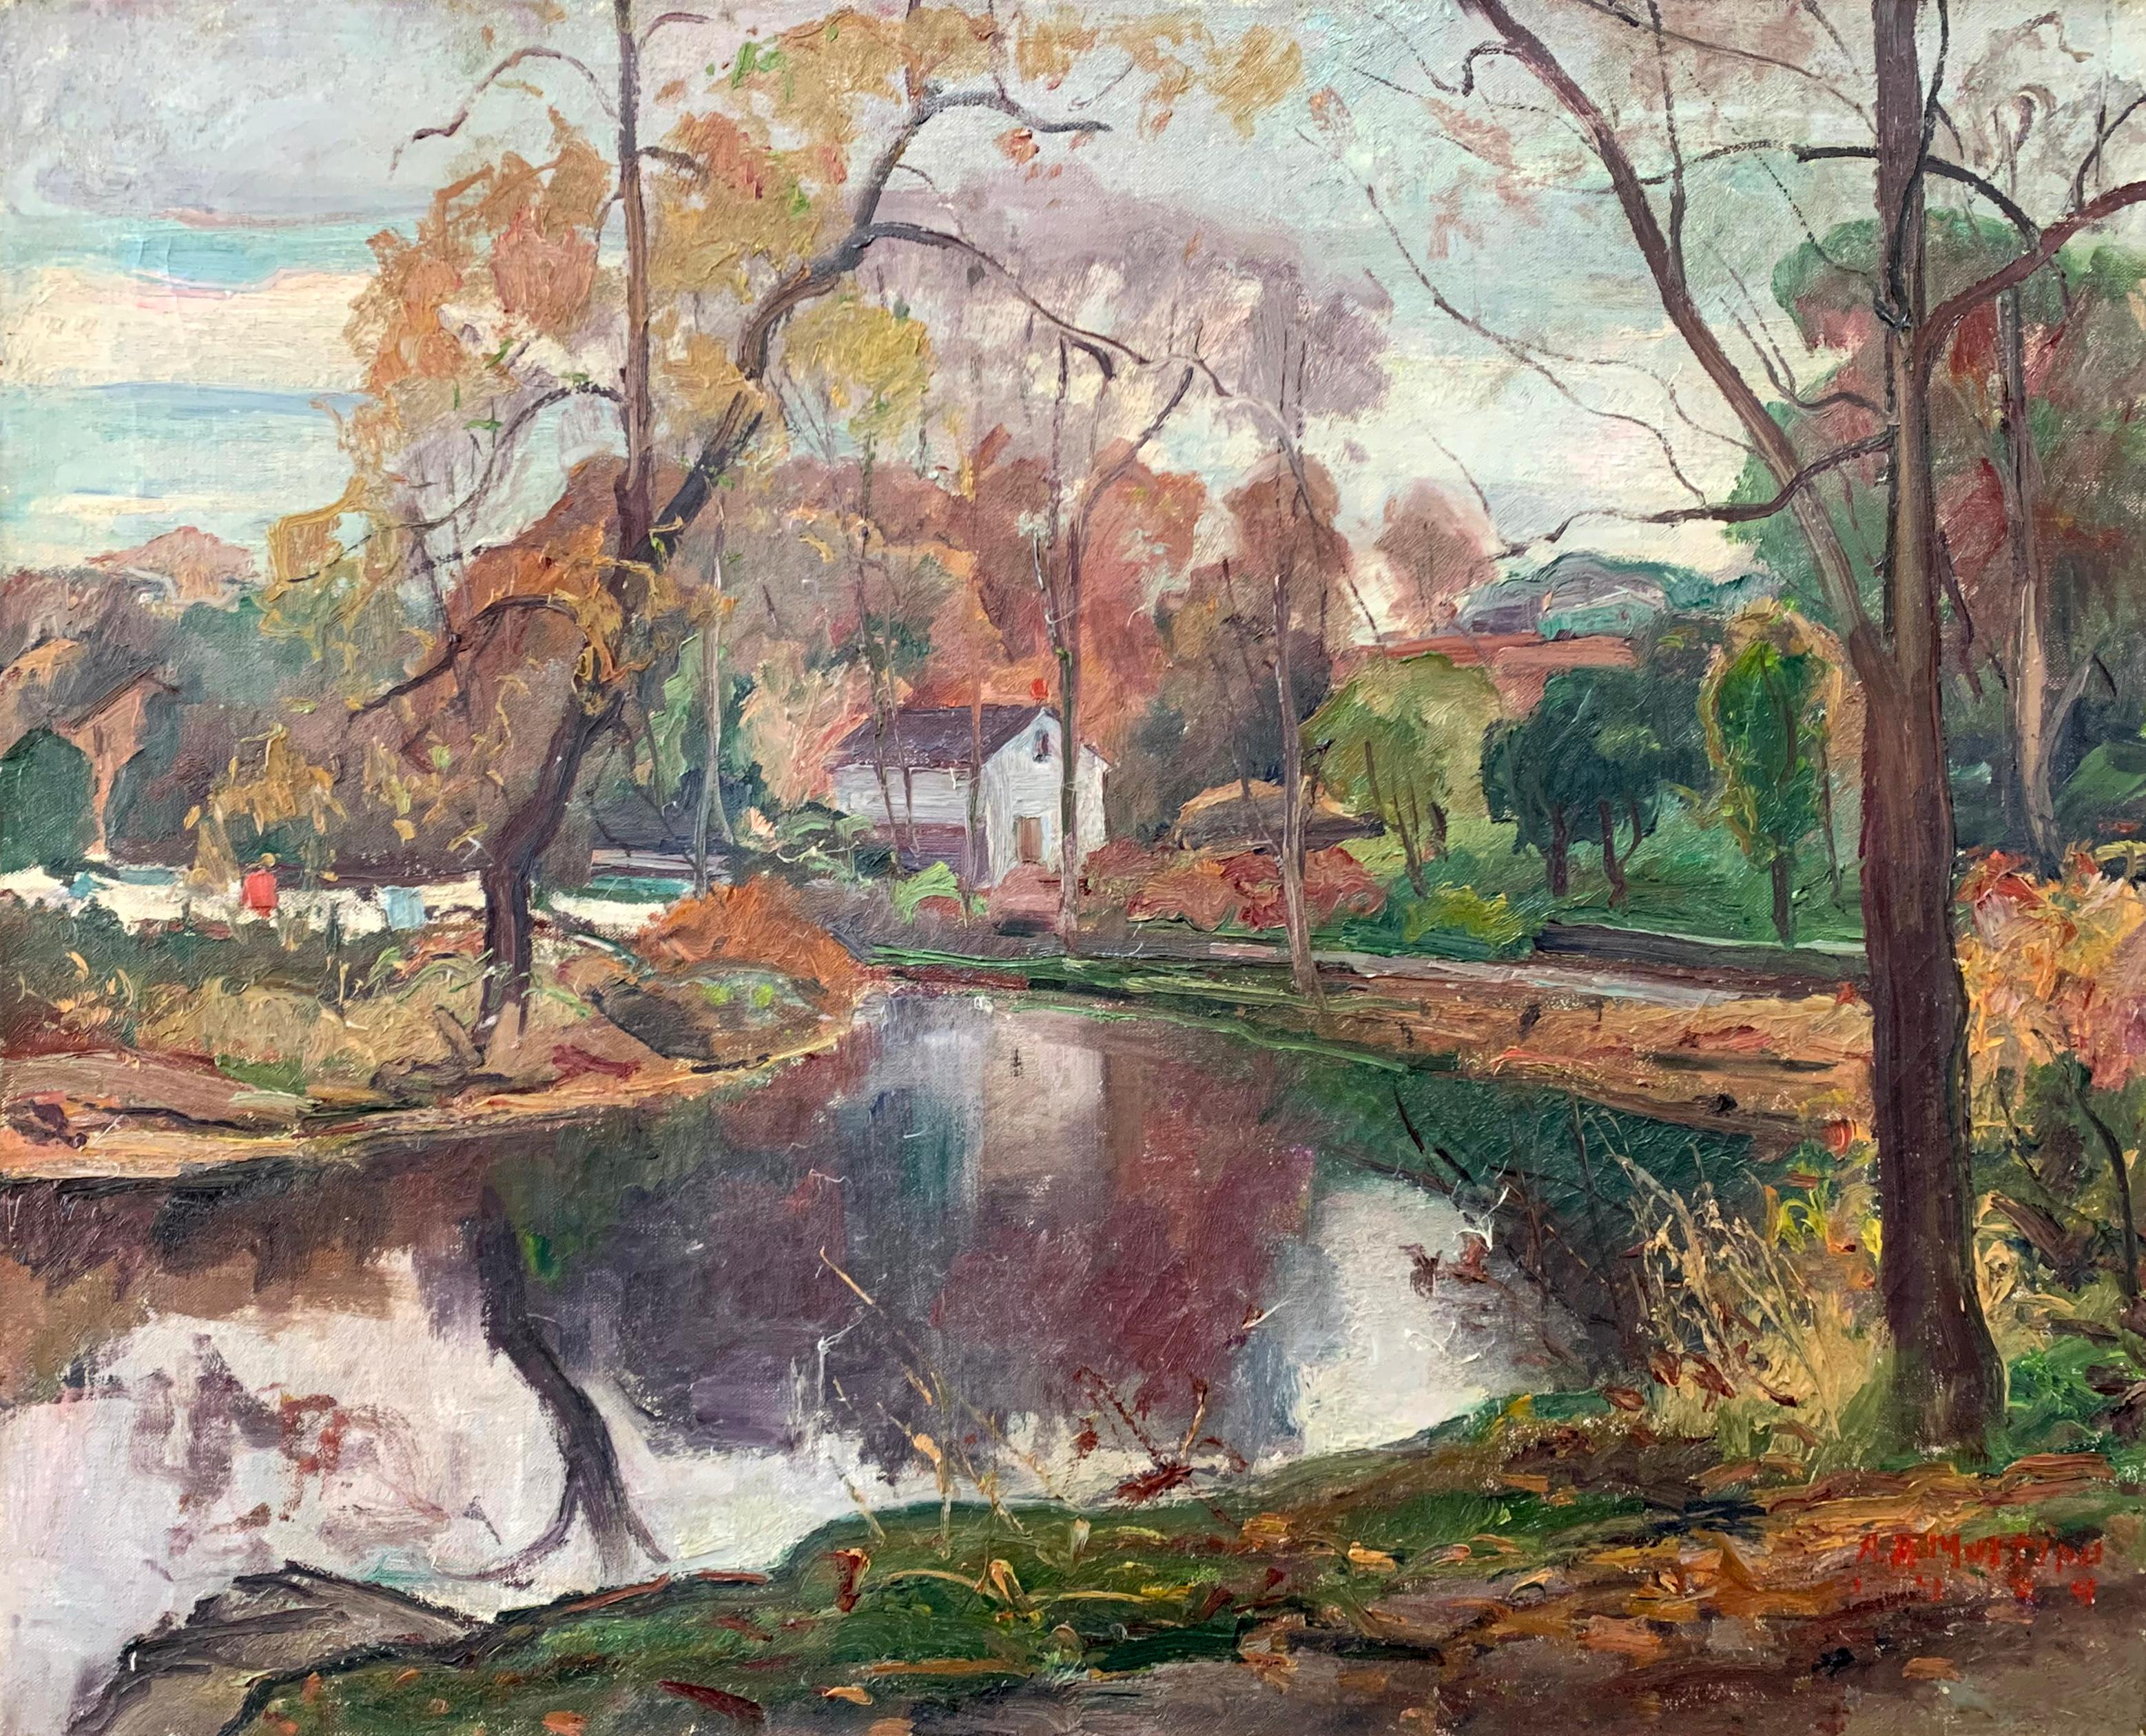 Reflections, American Impressionist Landscape, Regional Scene, Delaware River - Painting by Antonio Pietro Martino